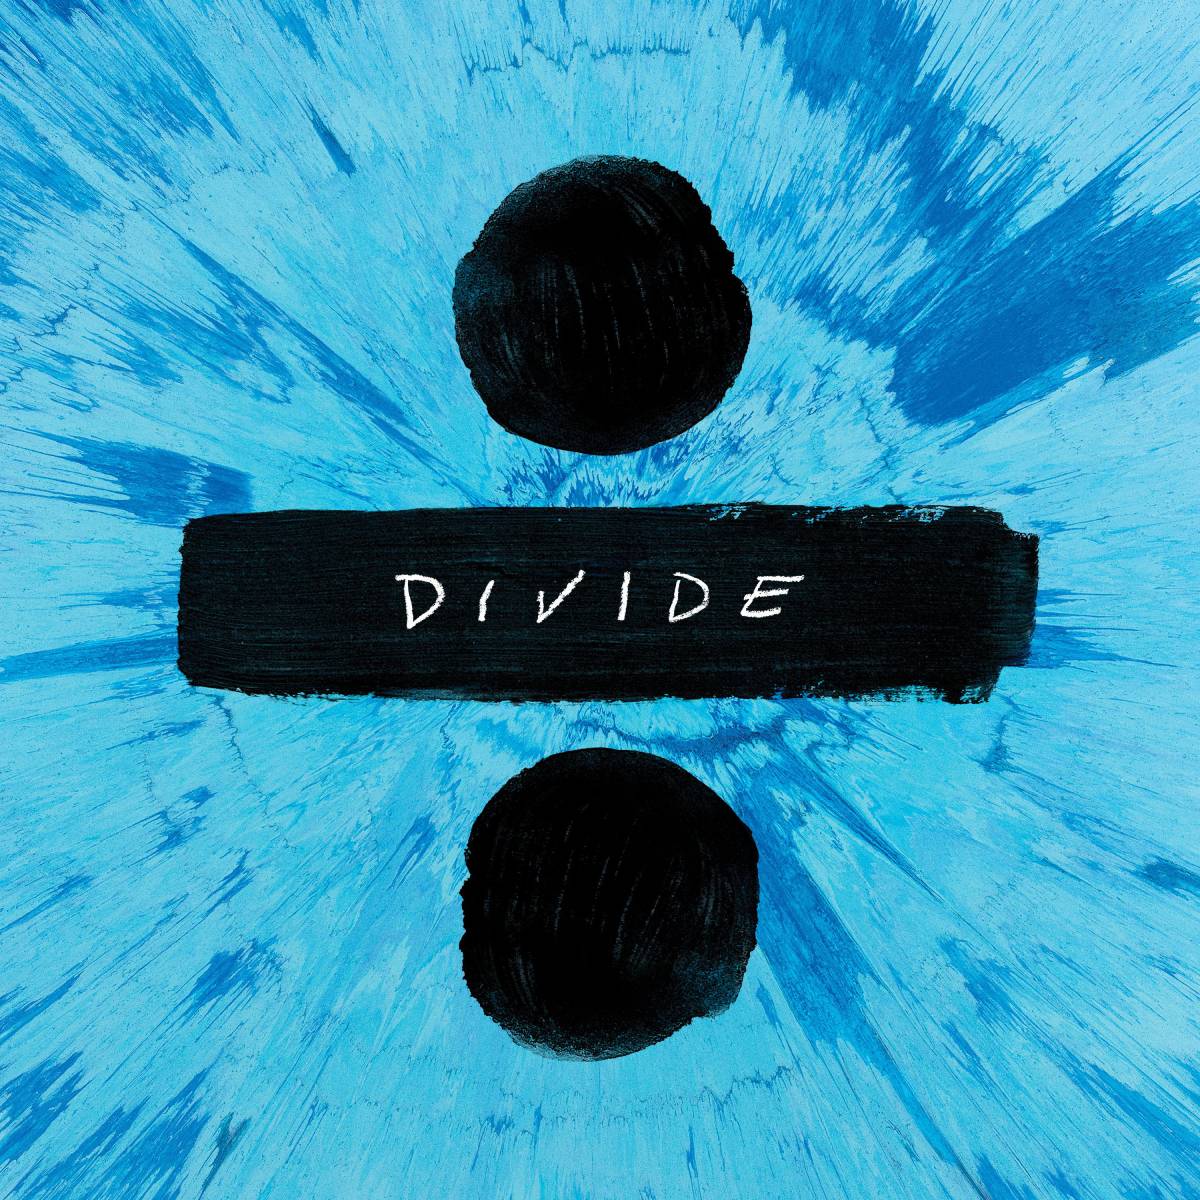 Divide (troisième album d'Ed Sheeran)